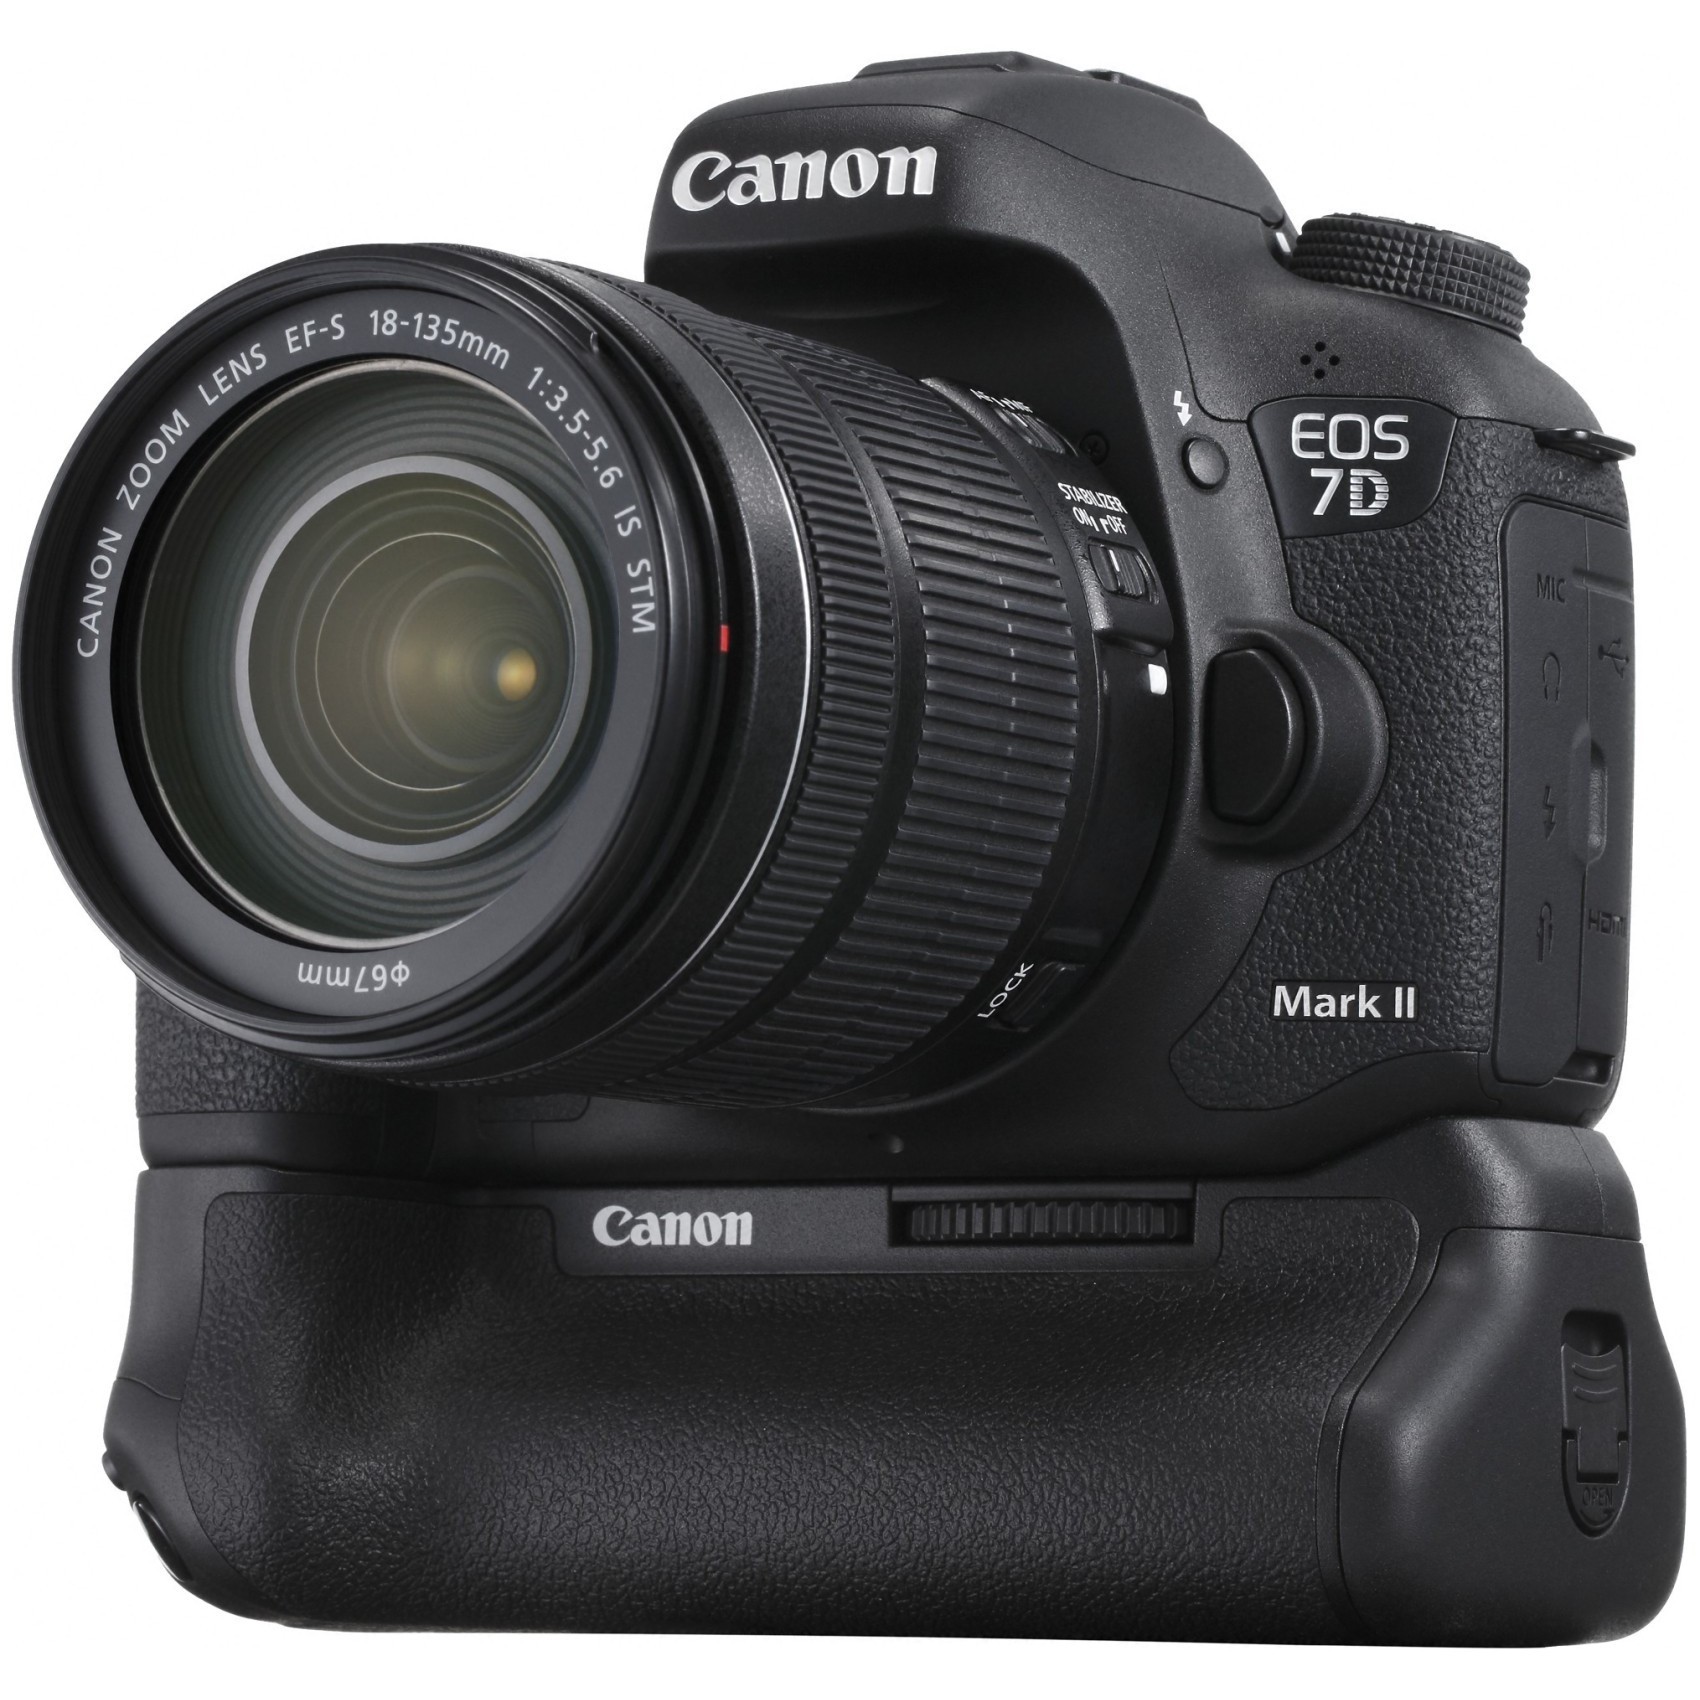 Eos 7d mark. EOS 7d Mark 2. Canon EOS 7d. Canon 7d Mark. Canon 7d Mark II.